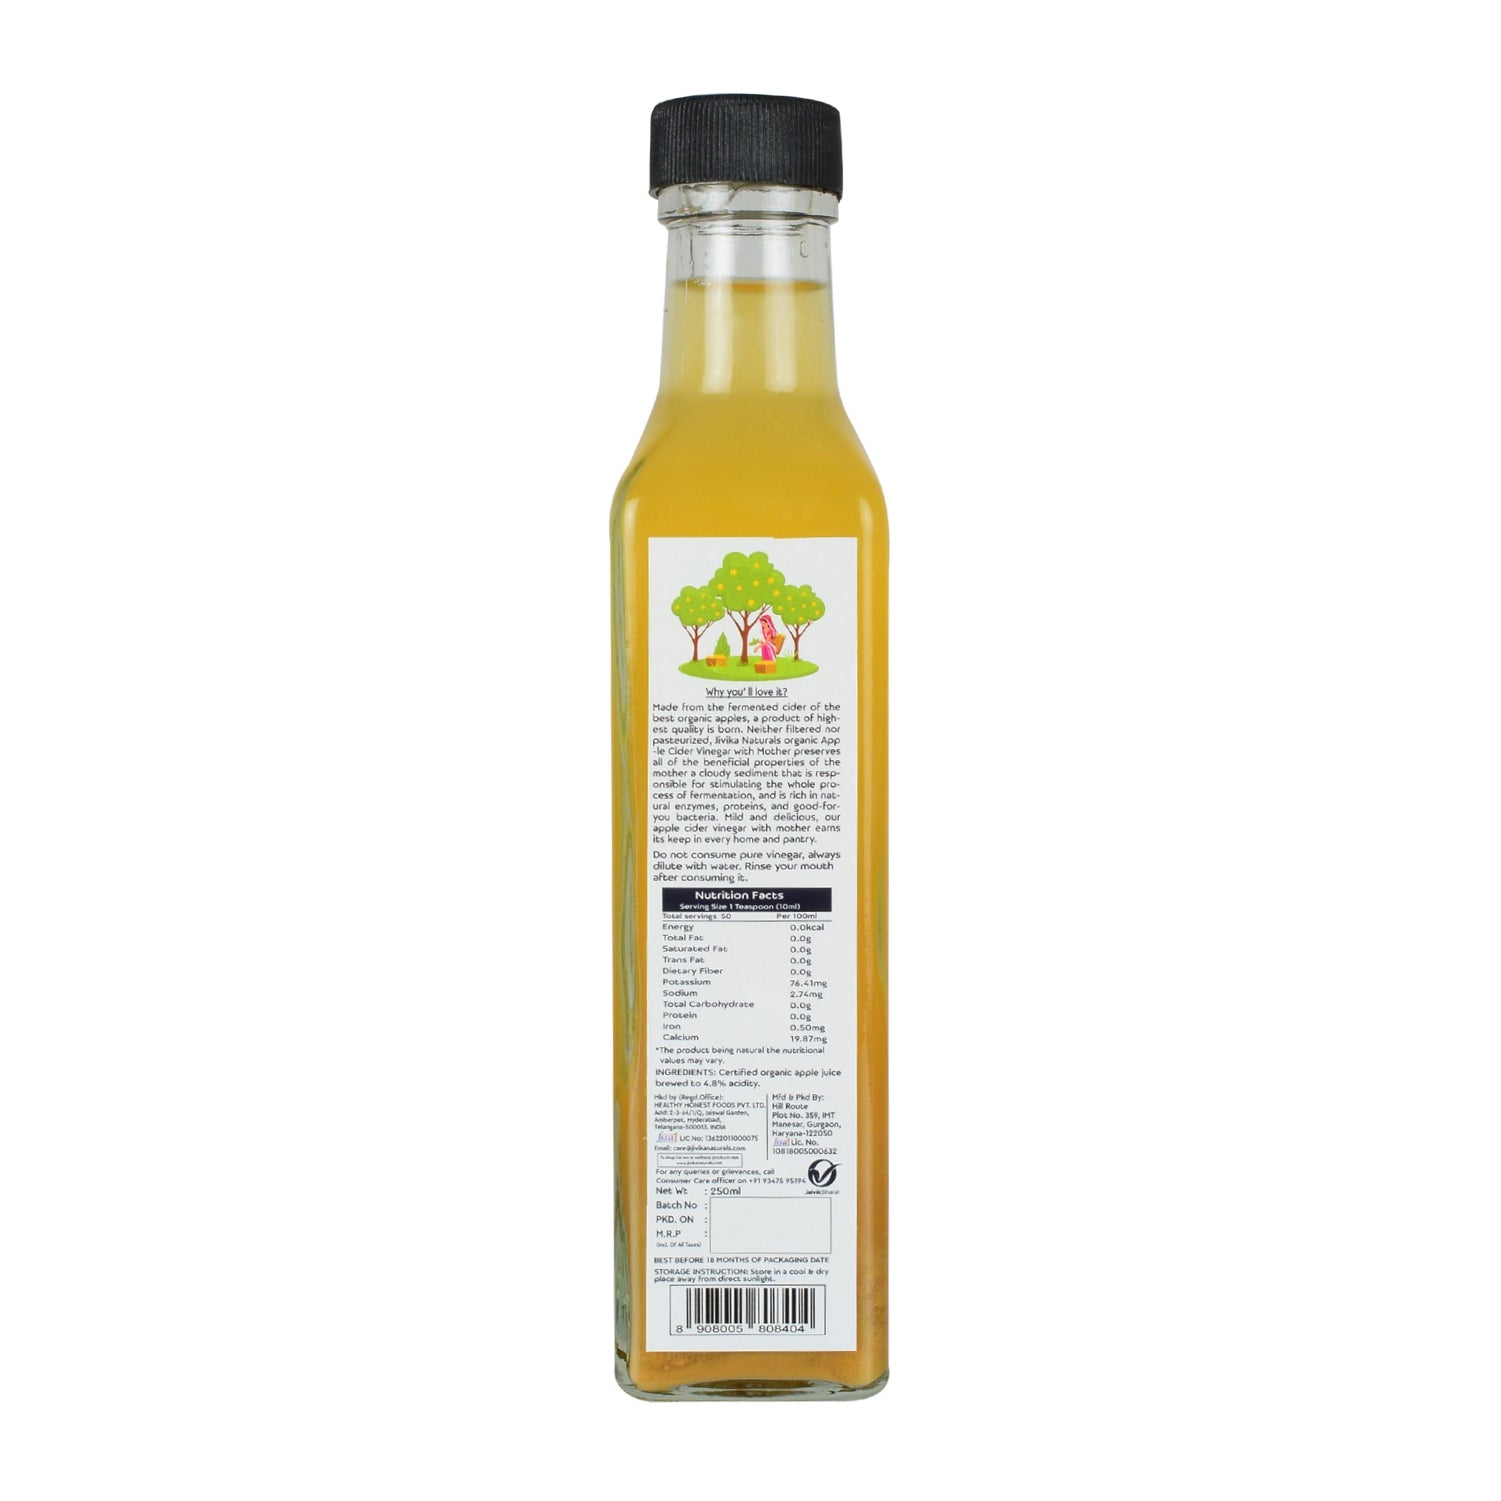 Jivika Apple Cider Vinegar with mother 250ml